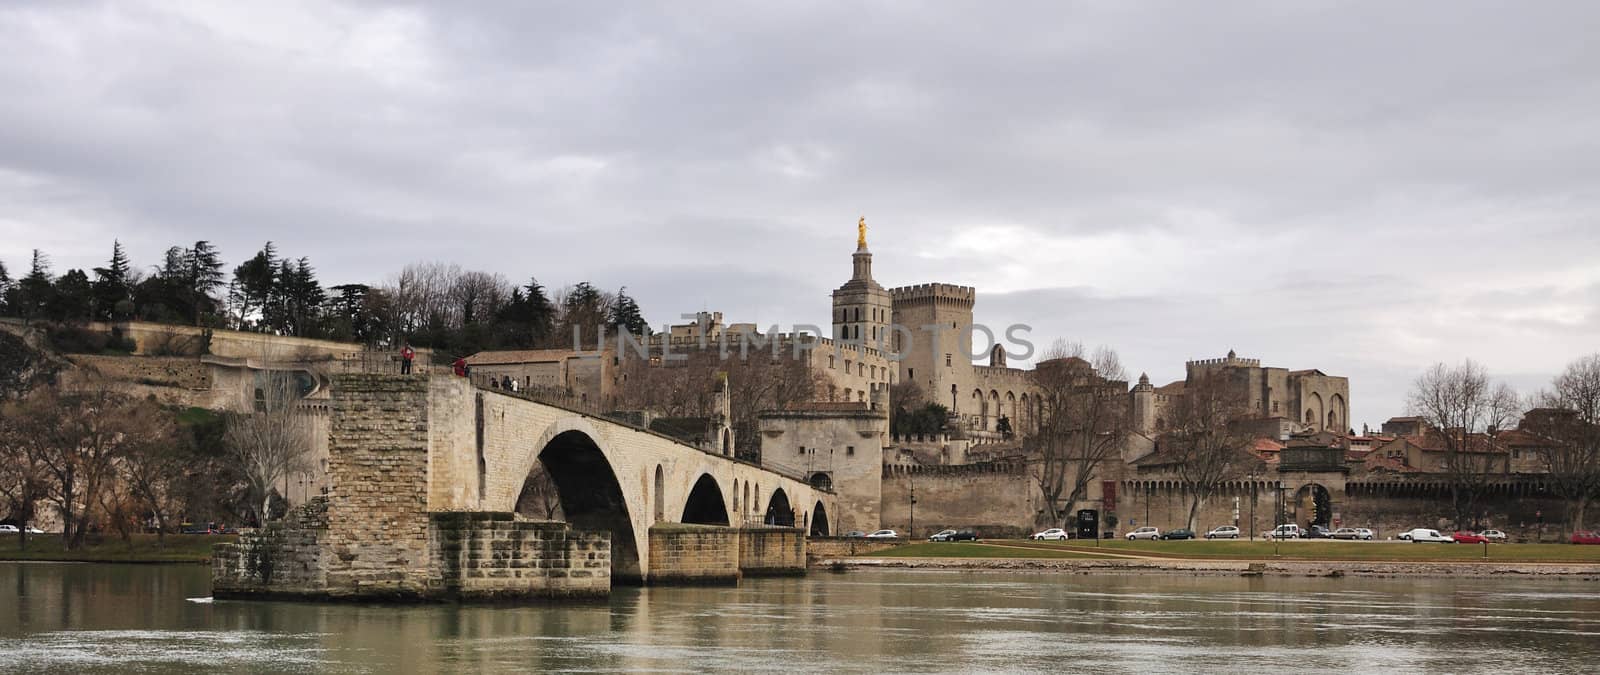 Avignons bridge, Pont d'Avignon, The Pont Saint-Benezet, also known as the Pont d'Avignon , is a famous medieval bridge in the town of Avignon, in southern France.